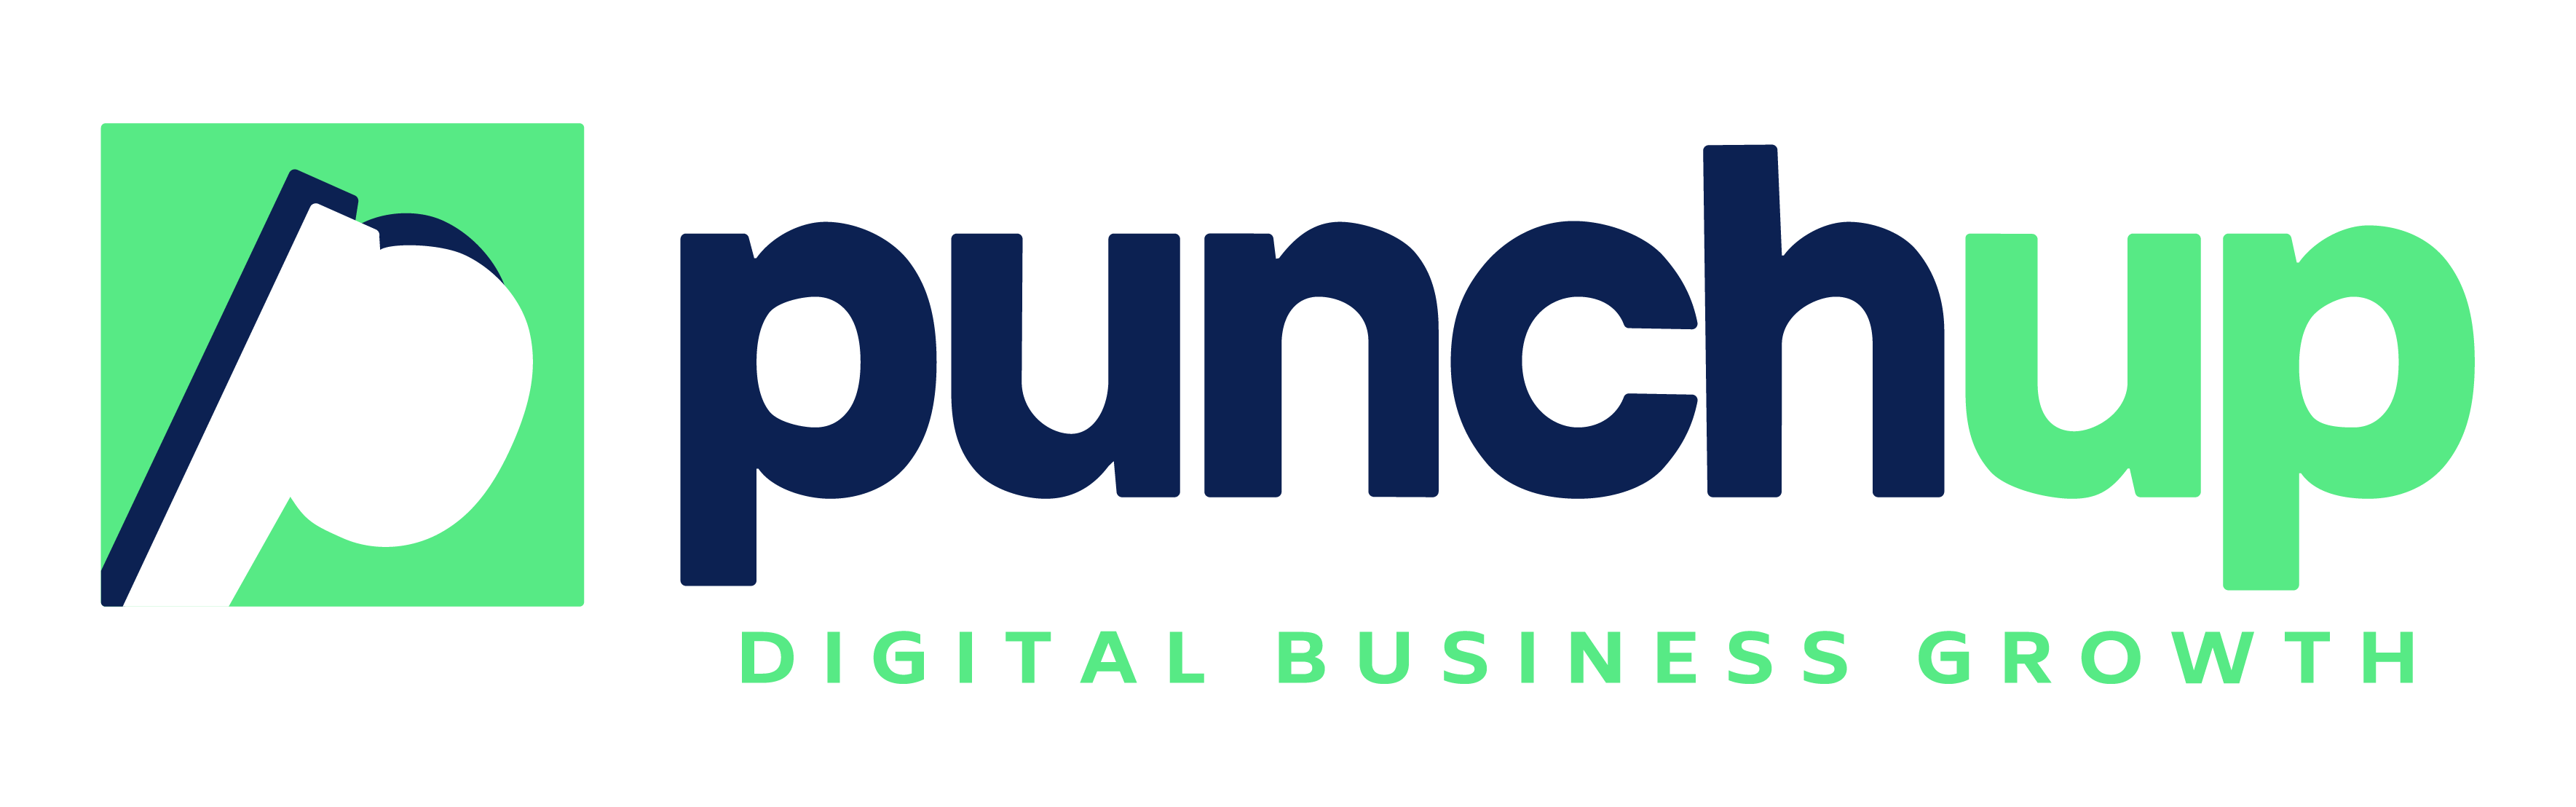 PUNCHUP | Growth, Digital Marketing, Consultancy & Training